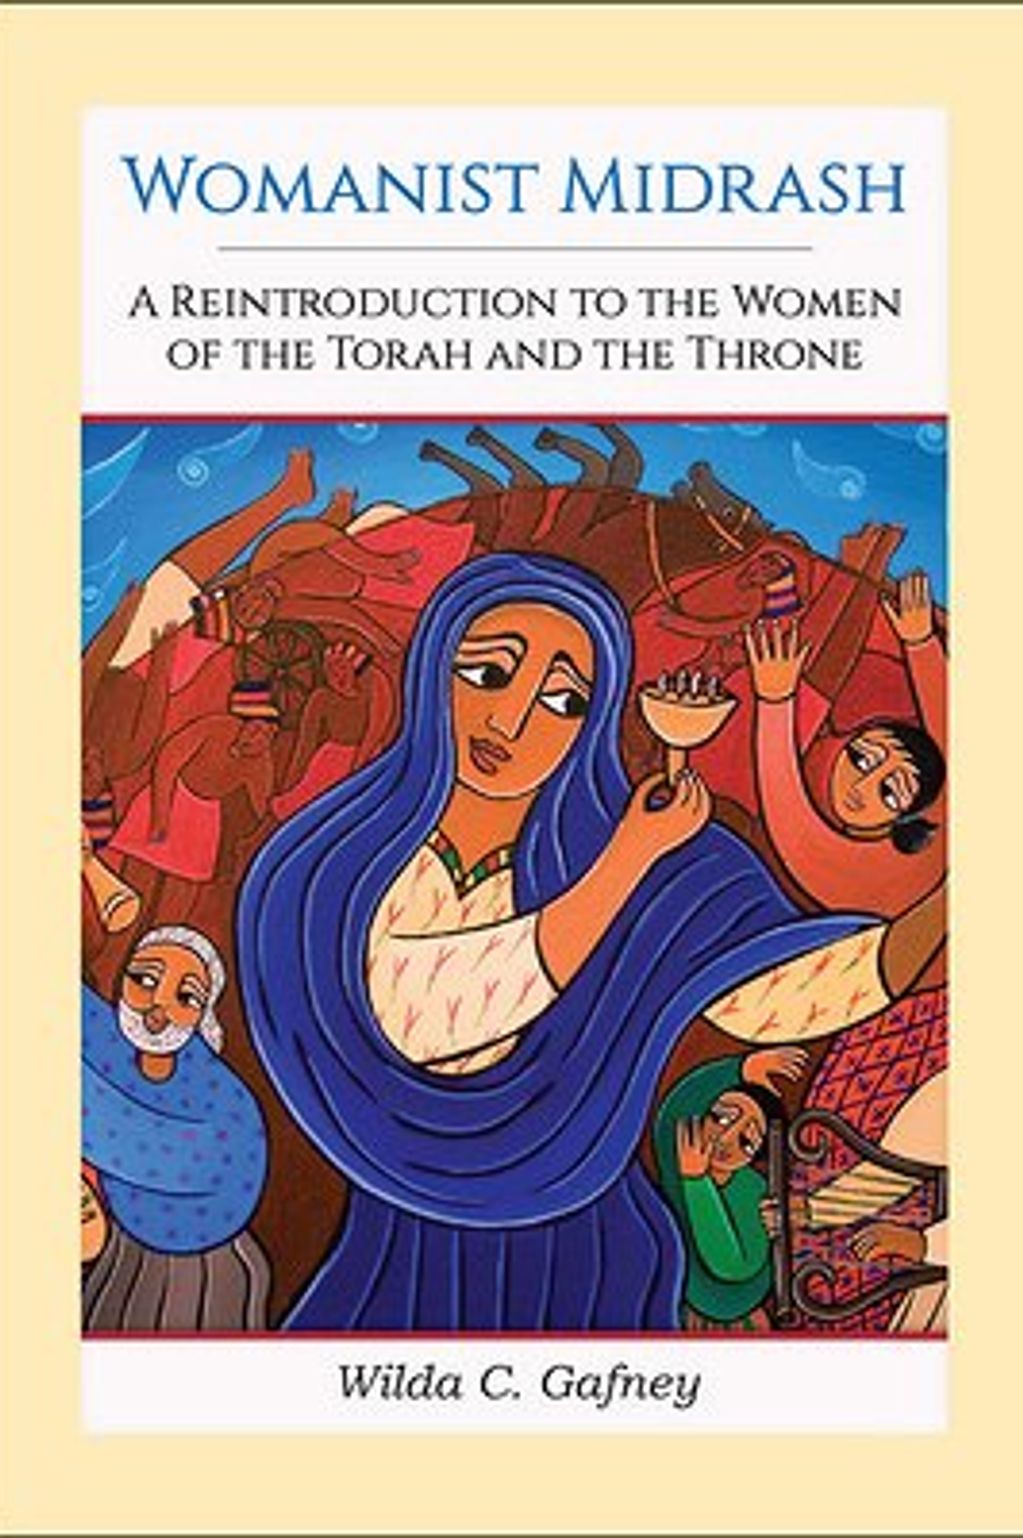 Wilda C. Gafney's Womanist Midrash